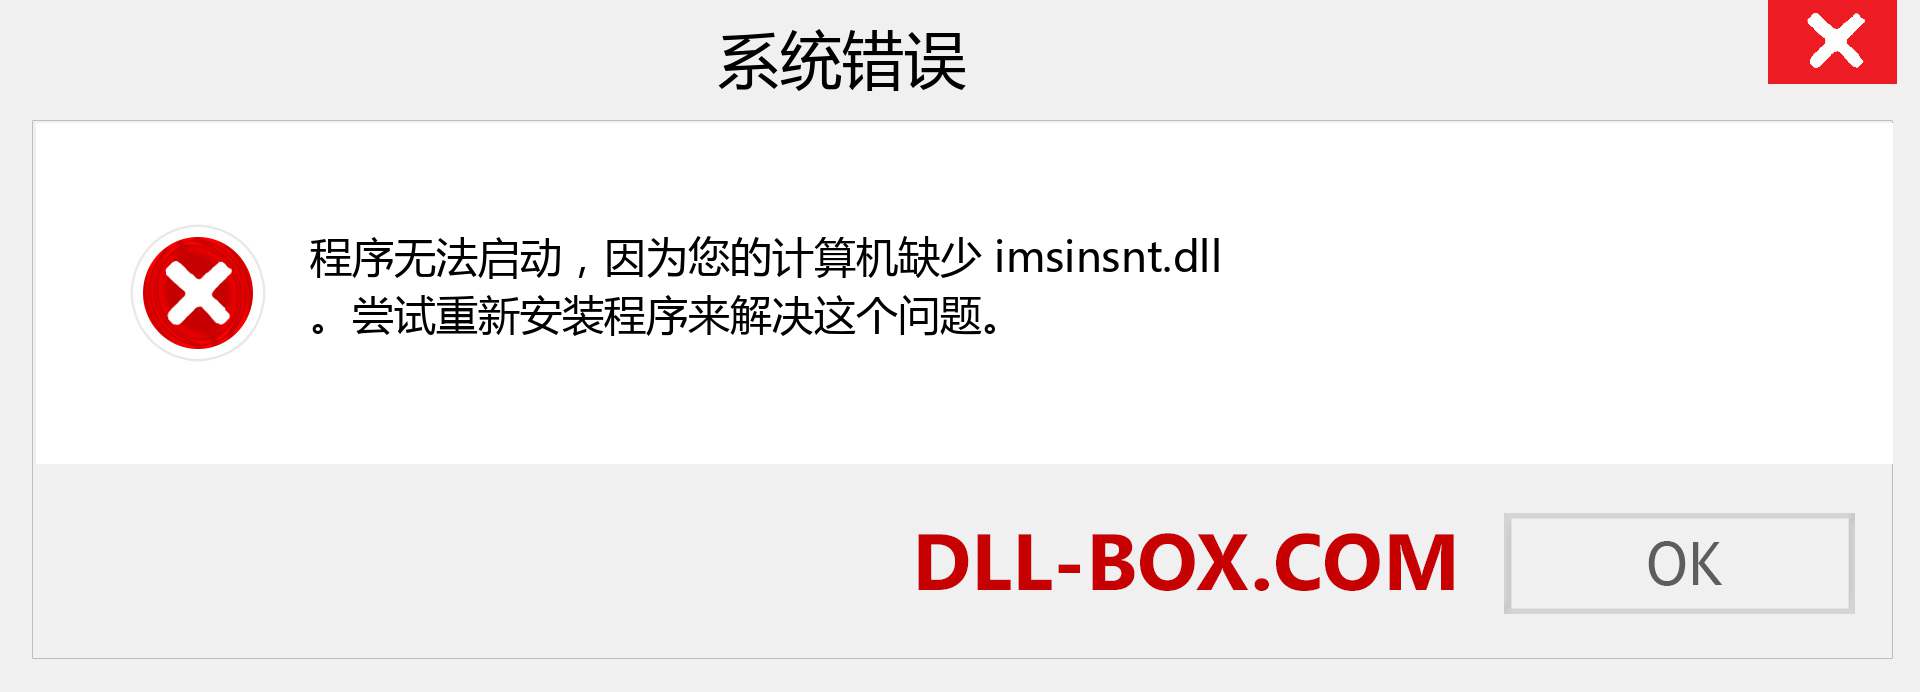 imsinsnt.dll 文件丢失？。 适用于 Windows 7、8、10 的下载 - 修复 Windows、照片、图像上的 imsinsnt dll 丢失错误